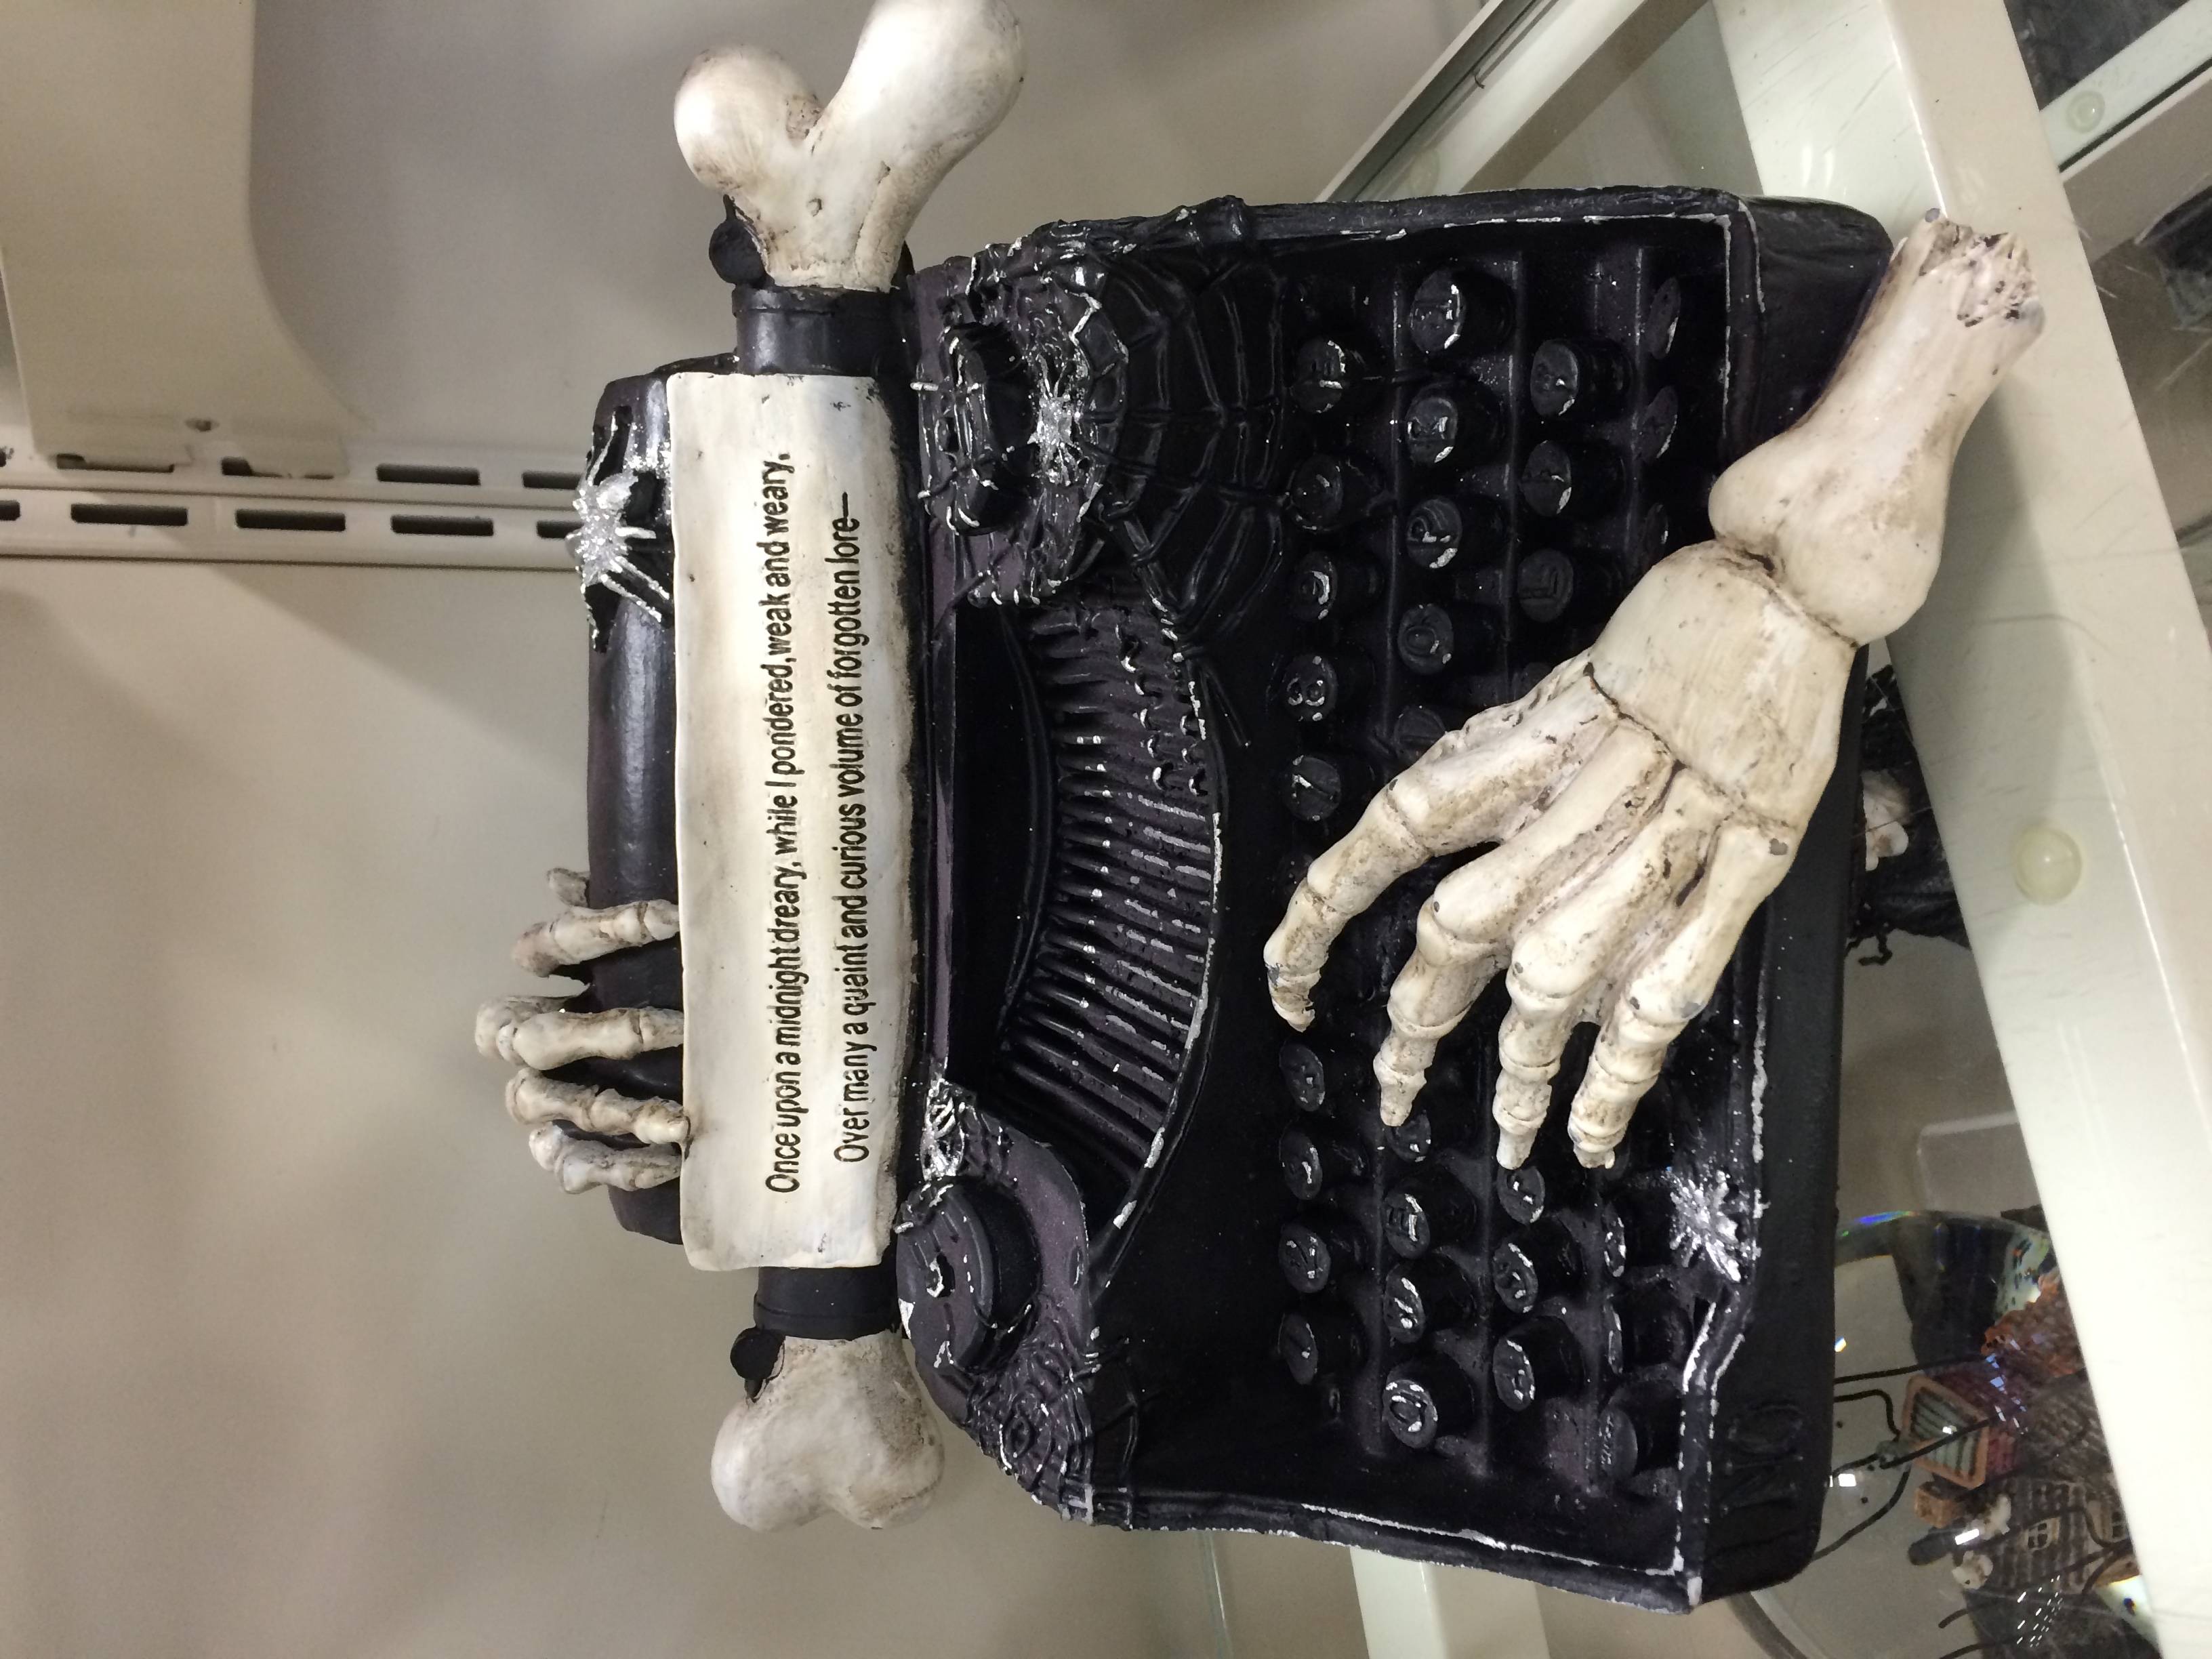 Skelletal Typewriter